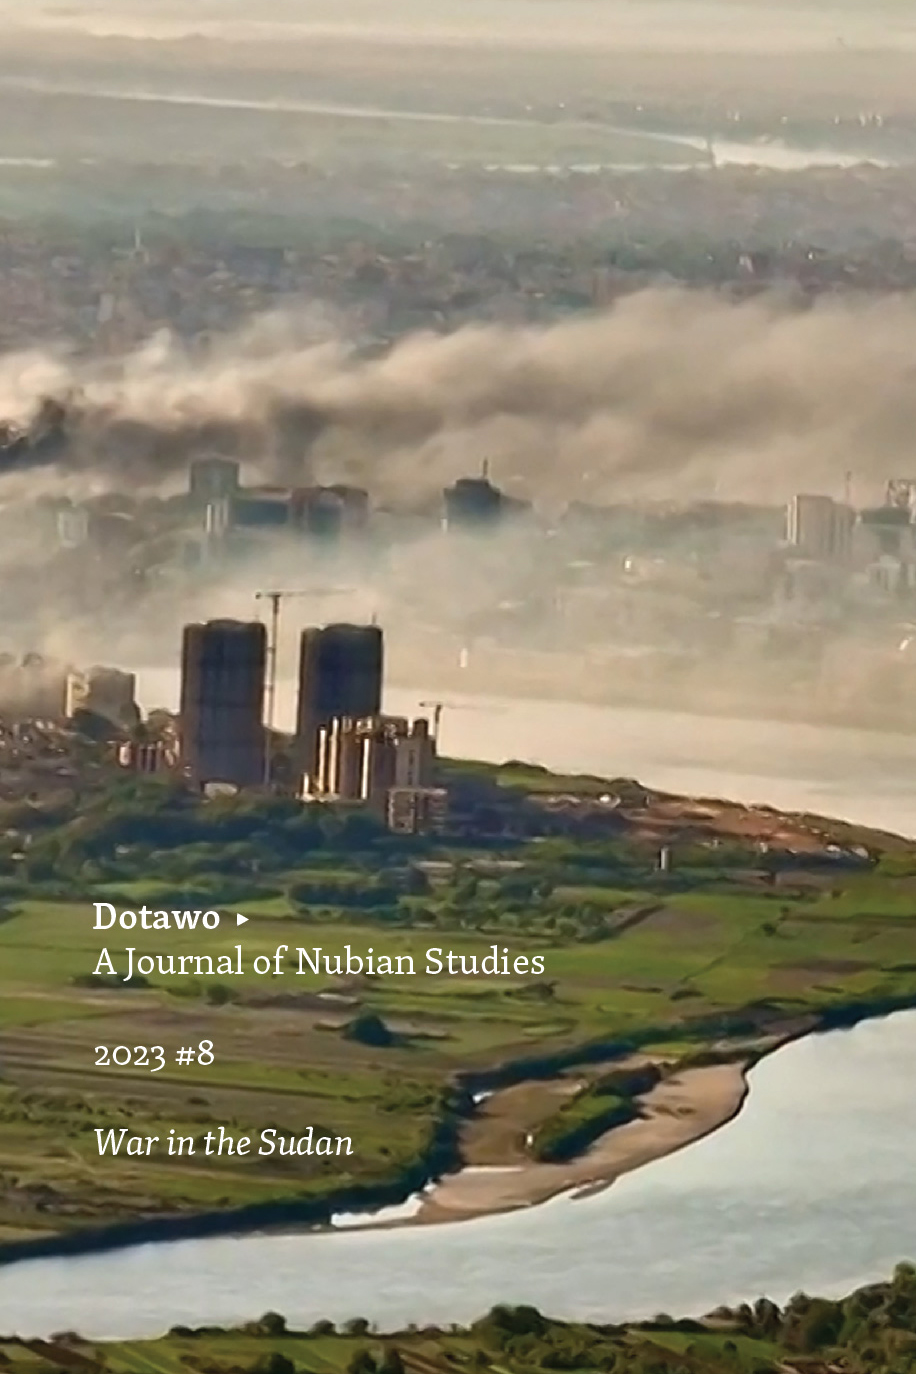 Dotawo: A Journal of Nubian Studies 8: War in the Sudan (punctum books, 2023)